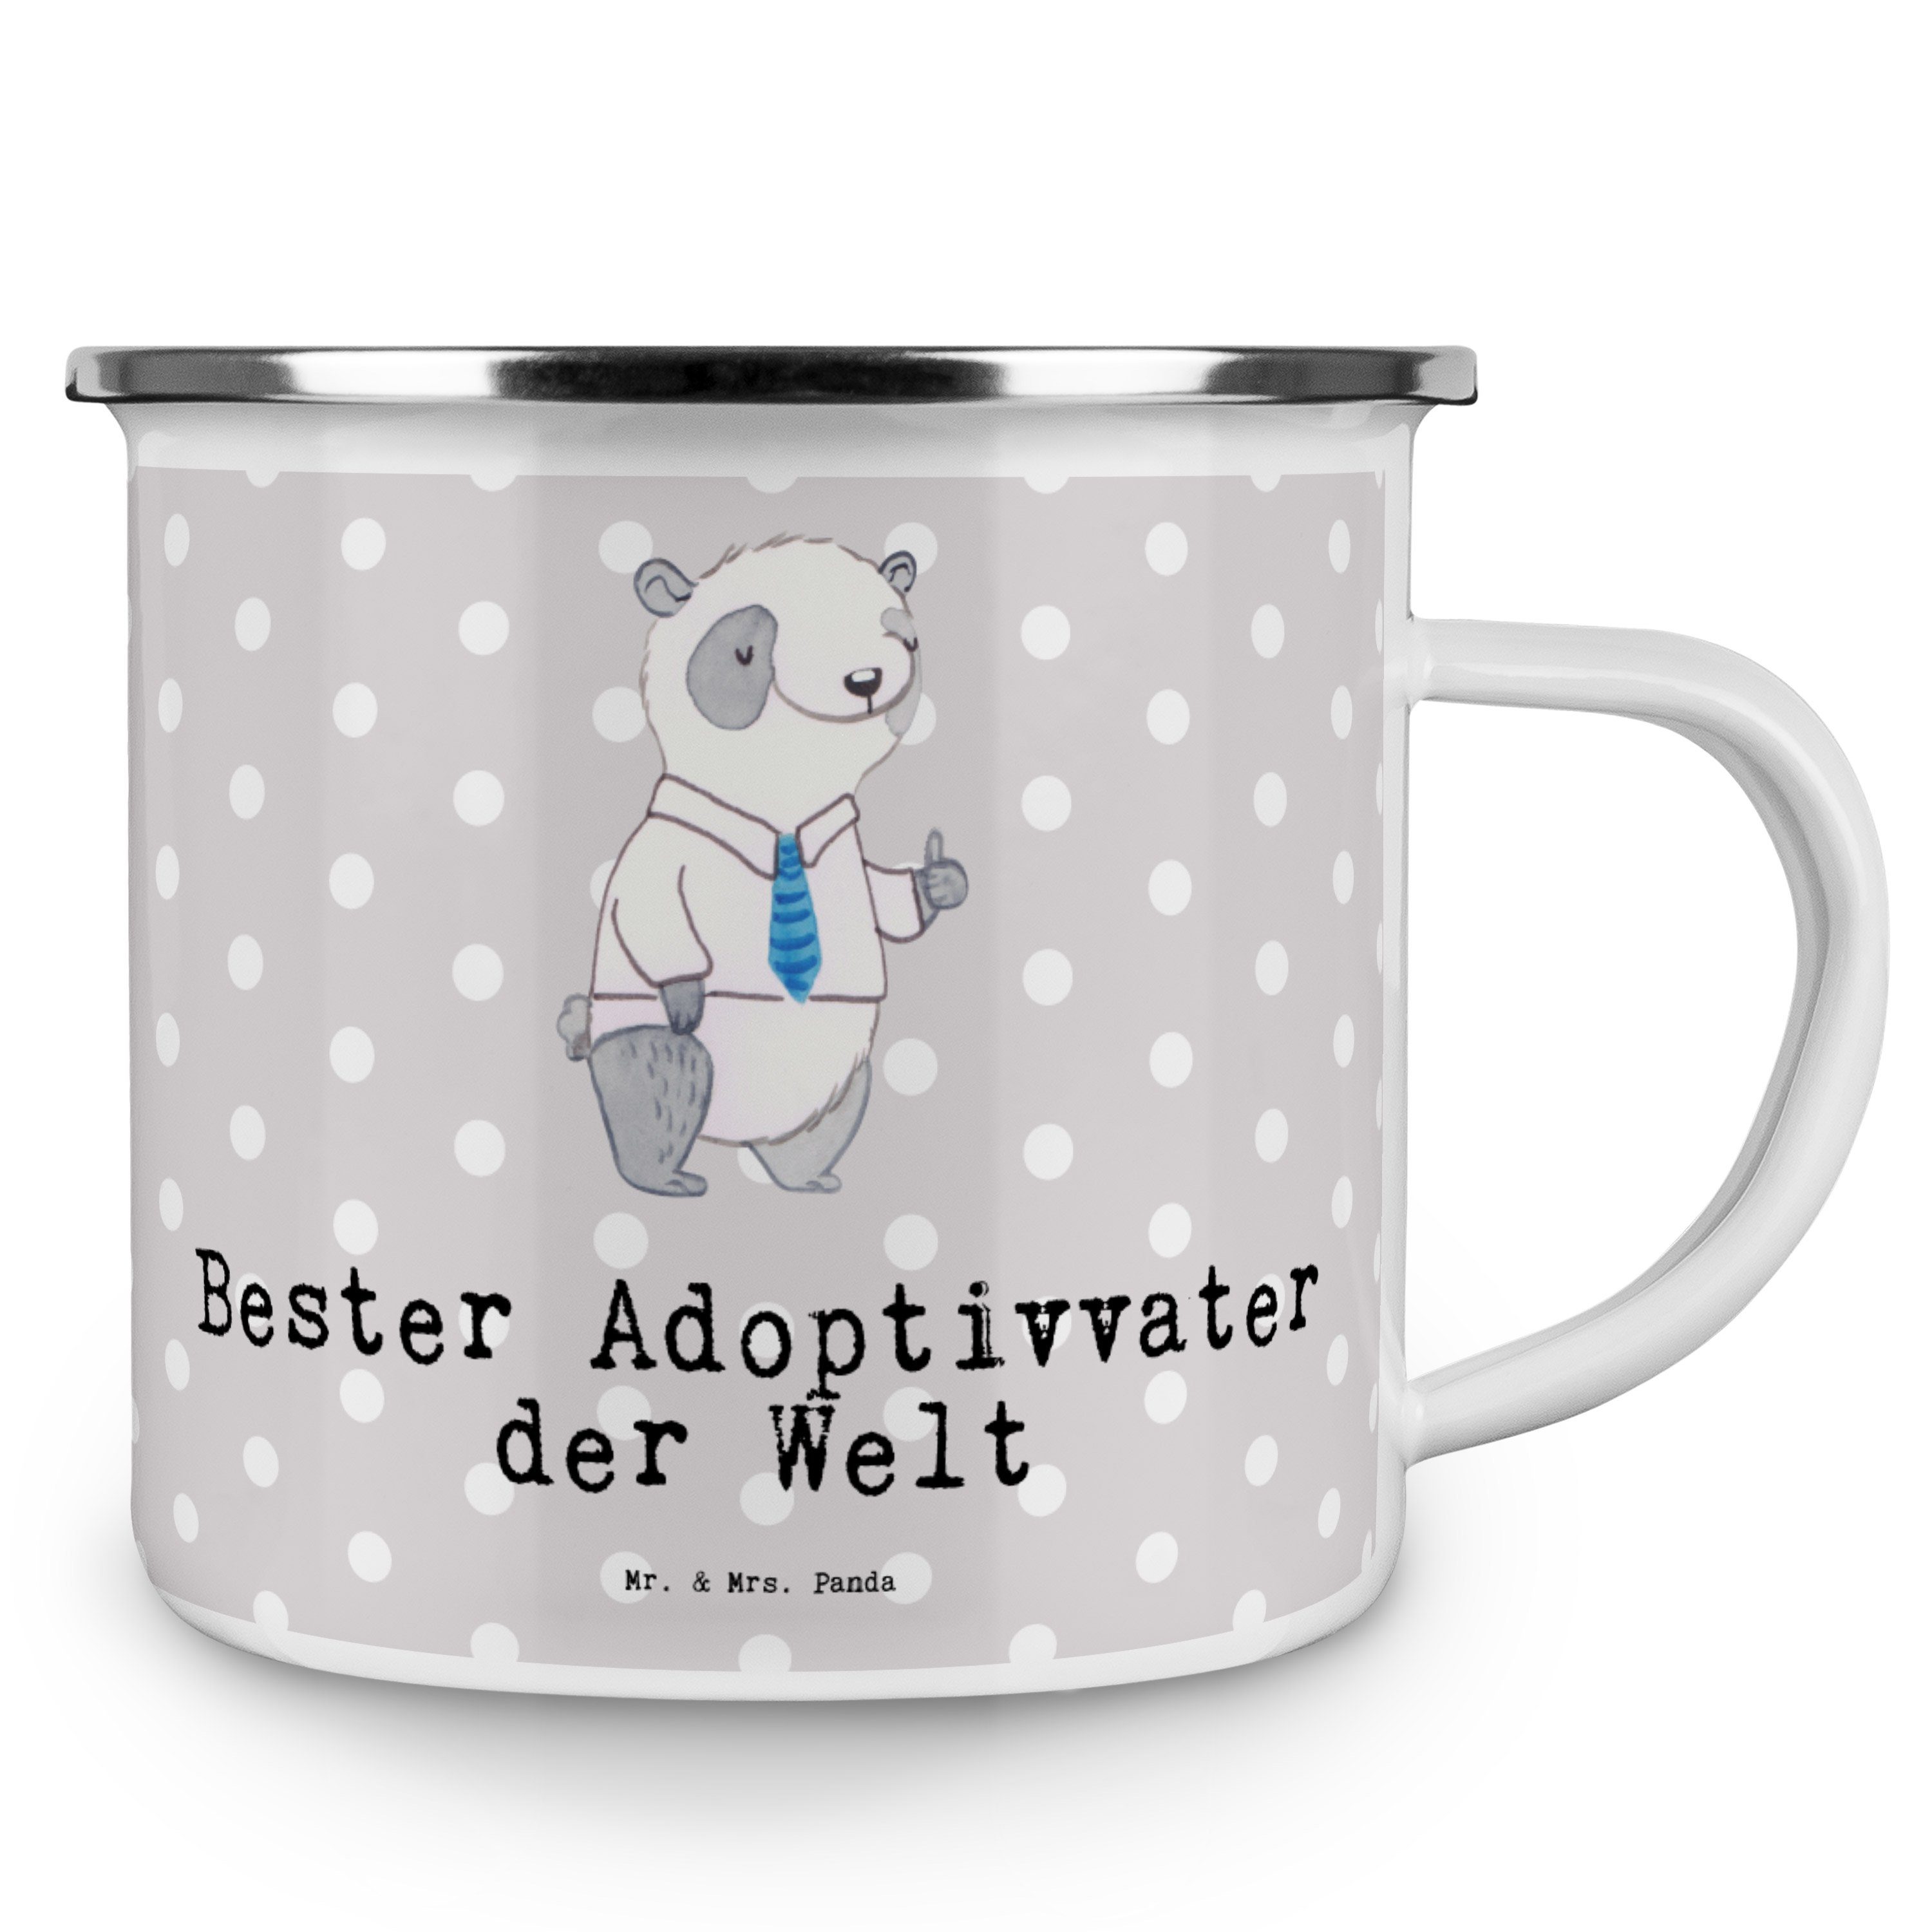 Geschenk, Adoptivvater Welt der - Becher adoptie, Mrs. Panda - & Bester Mr. Panda Pastell Emaille Grau